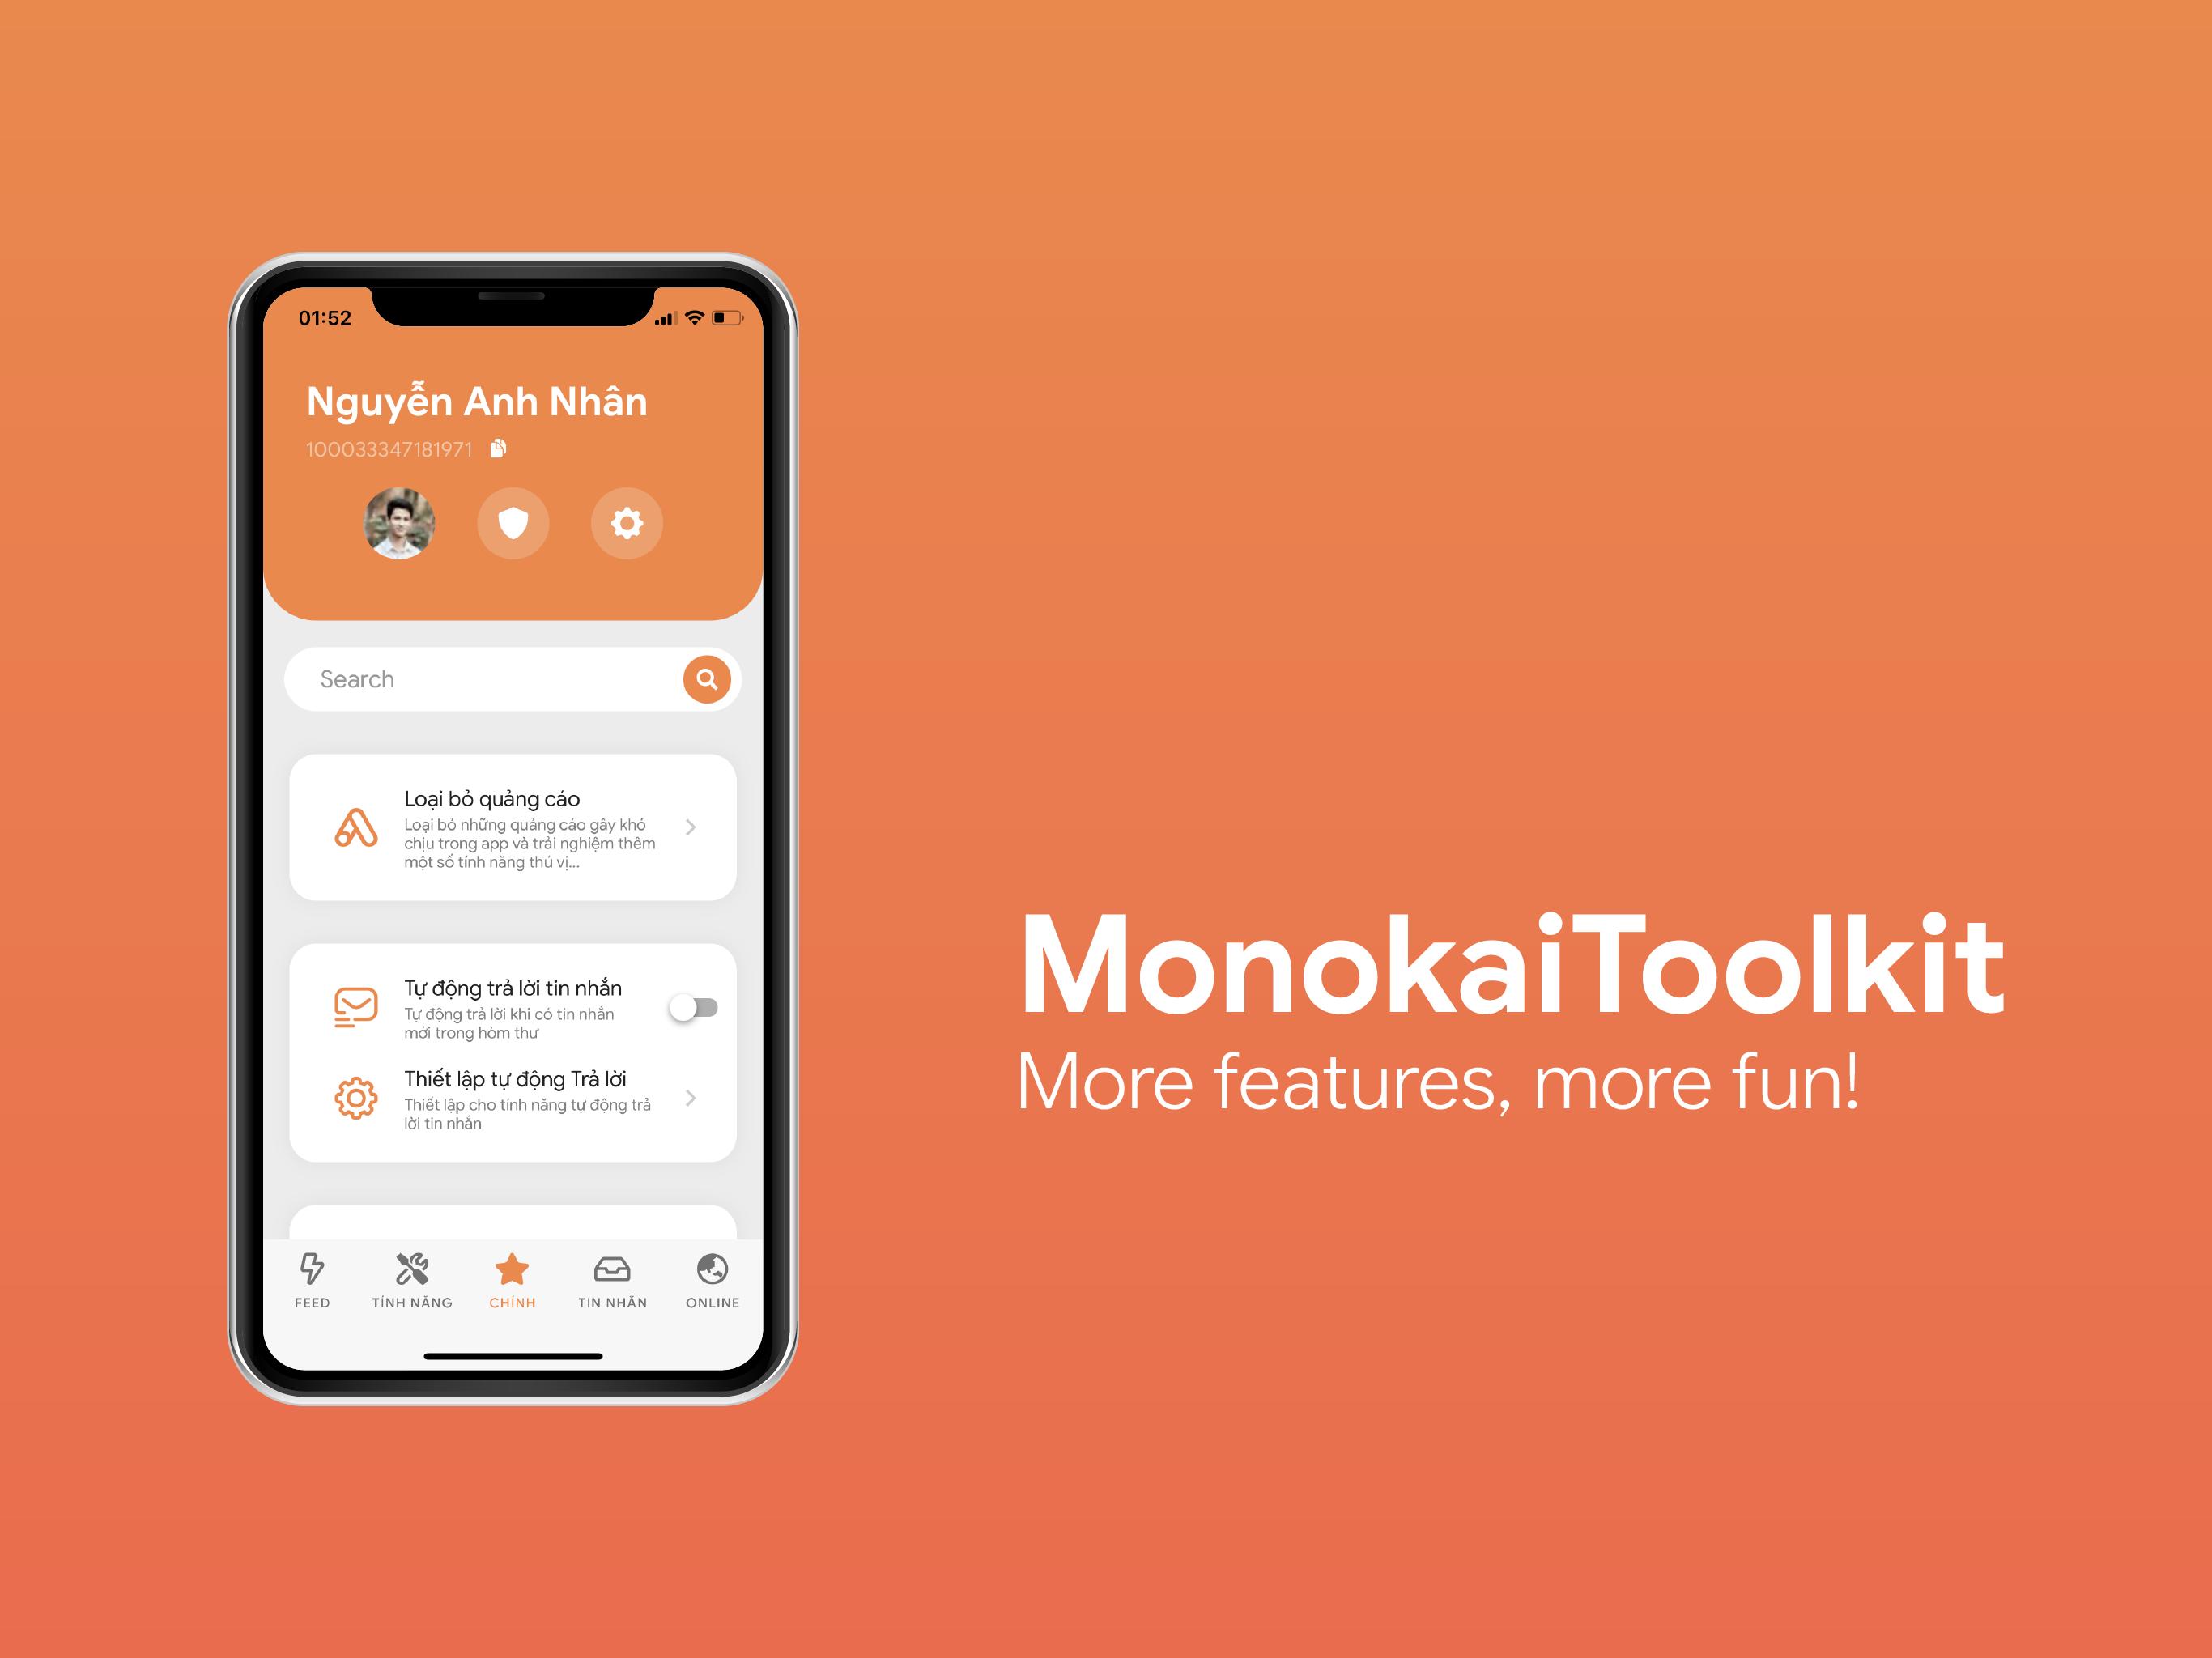 MonokaiToolkit - Super Toolkit for Facebook Users